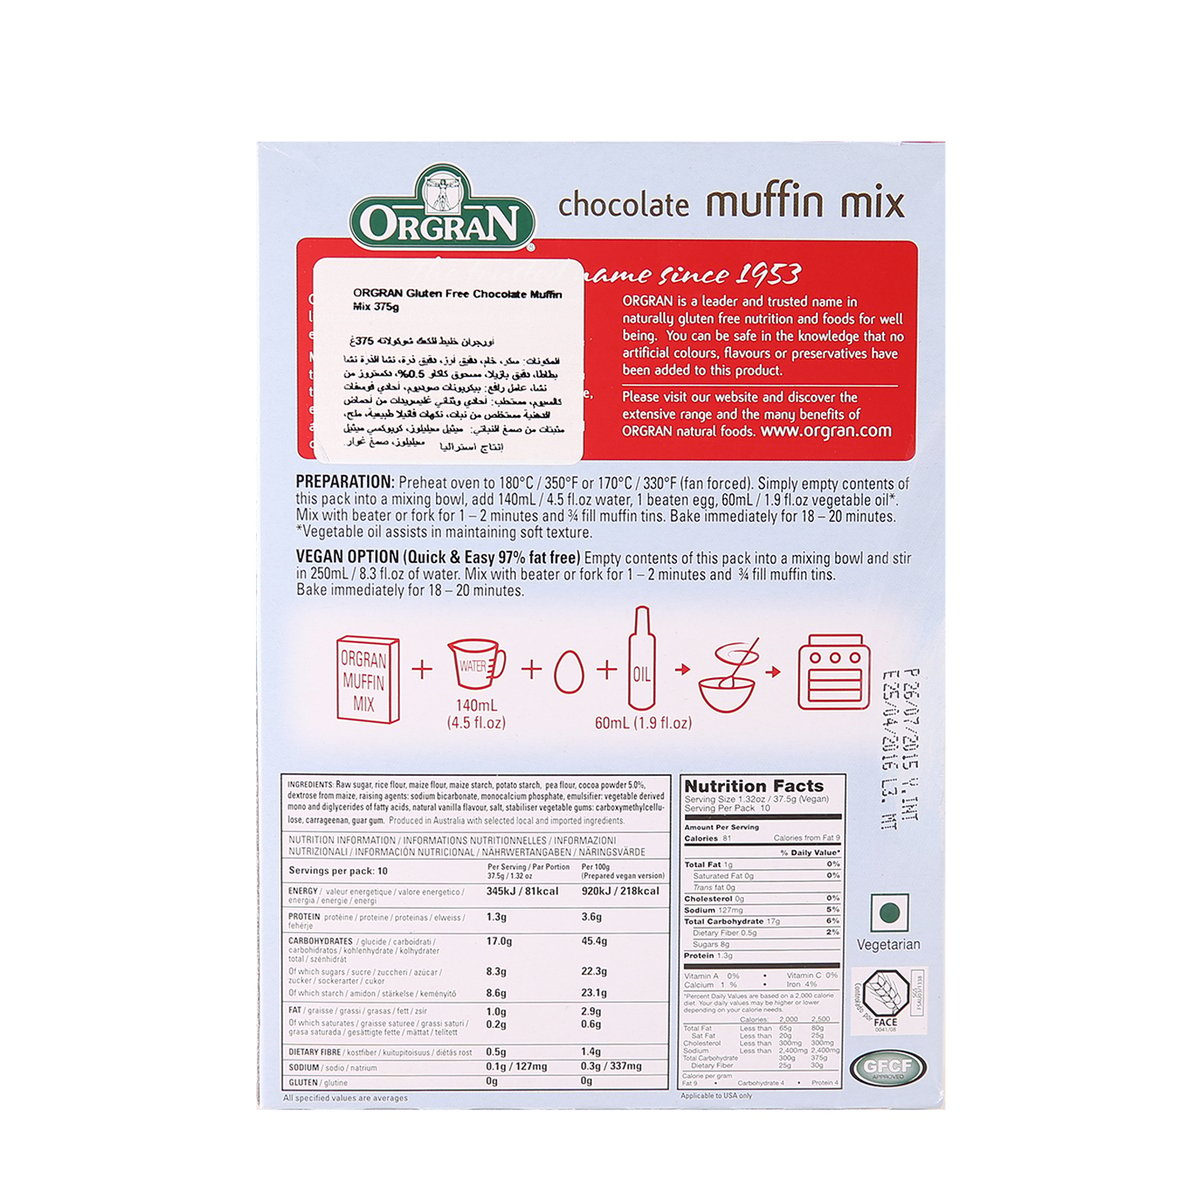 Orgran Gluten Free Chocolate Muffin Mix 375 g